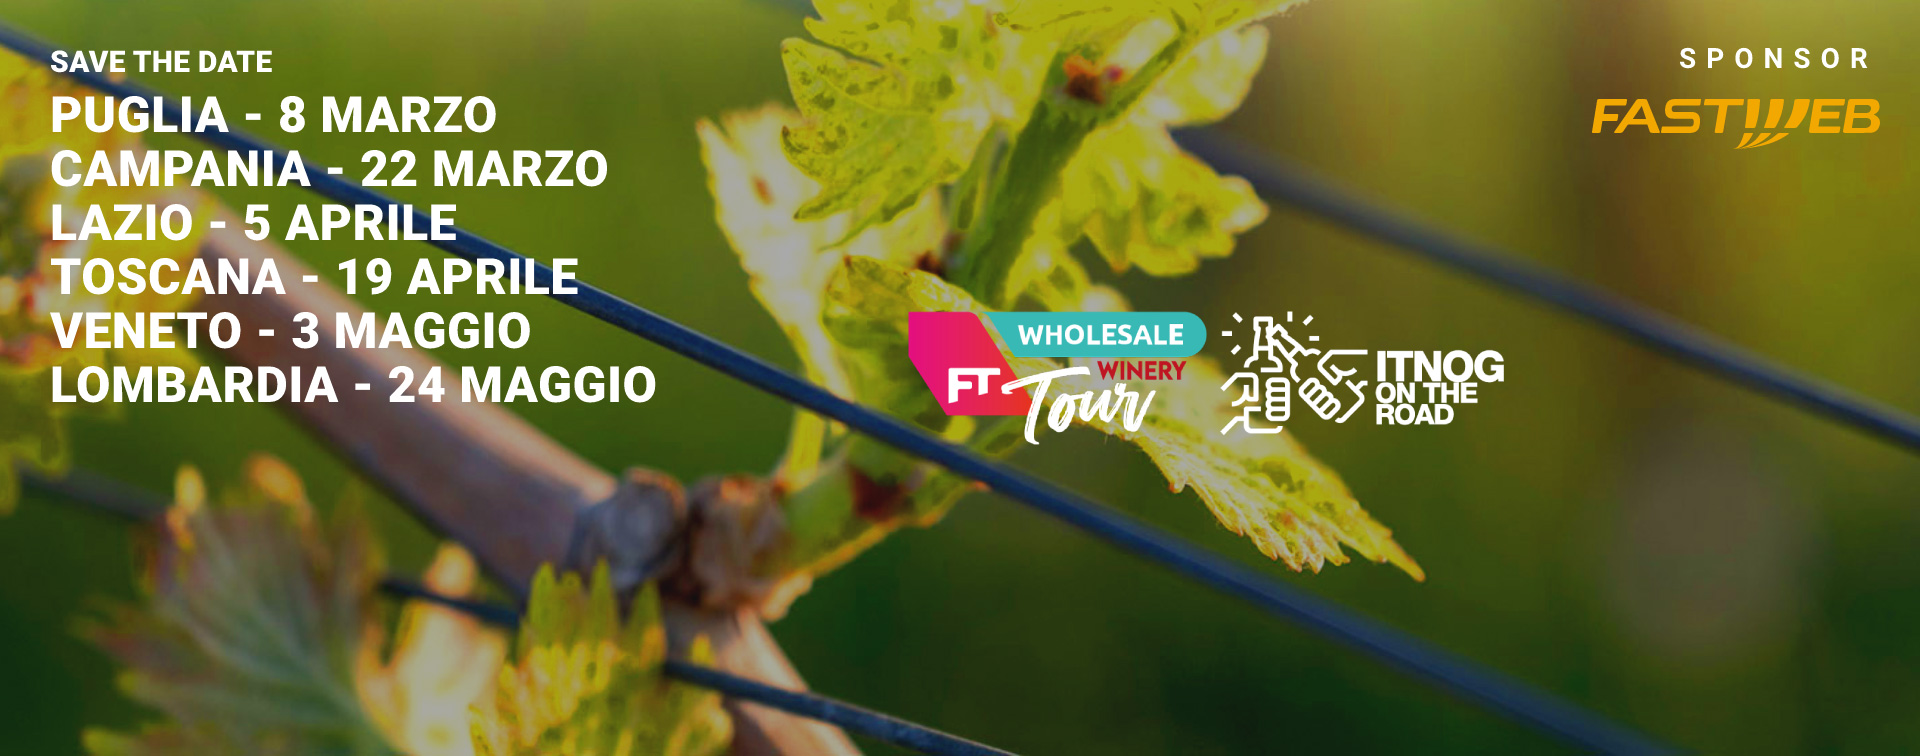 Fastweb è sponsor del Wholesale Winery Tour